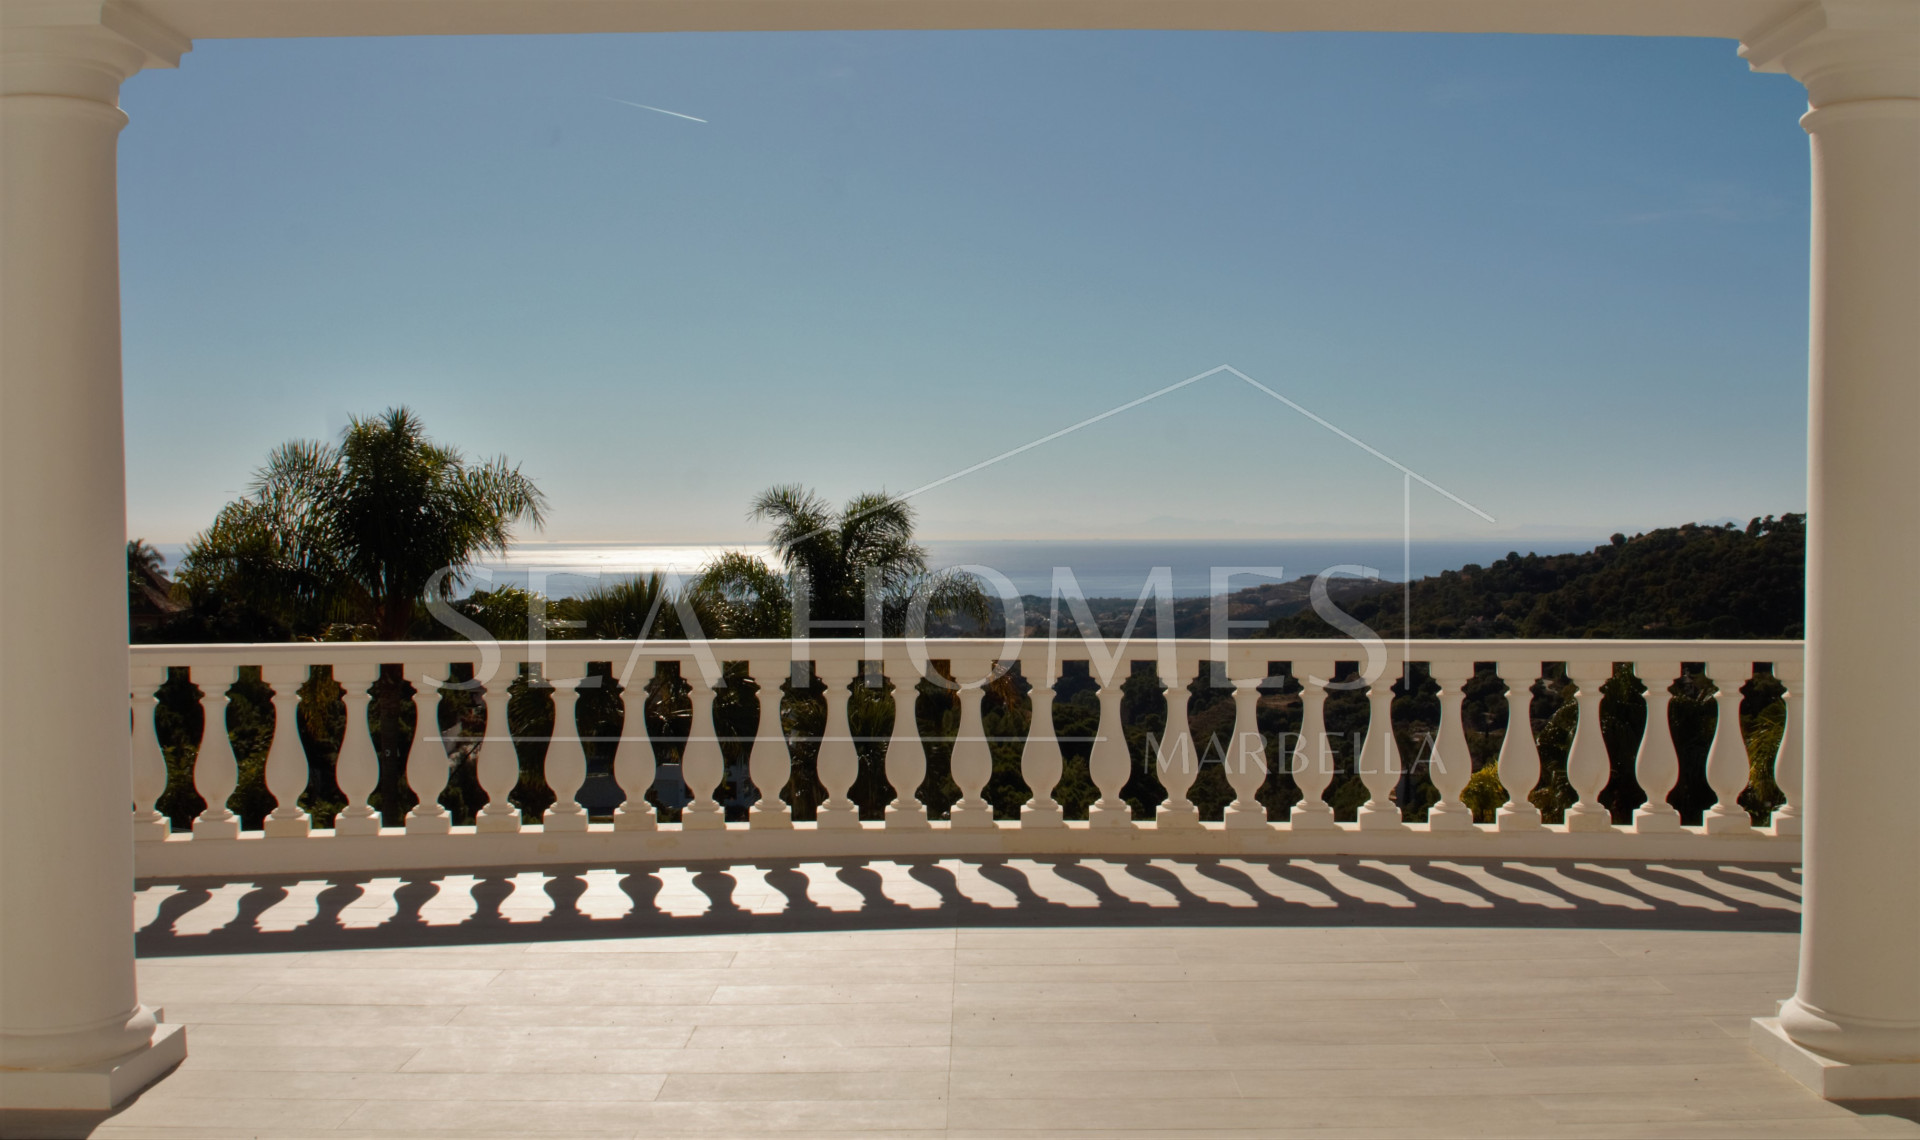 Exquisite La Zagaleta Villa in Benahavís with Sea Views and Luxury Amenities